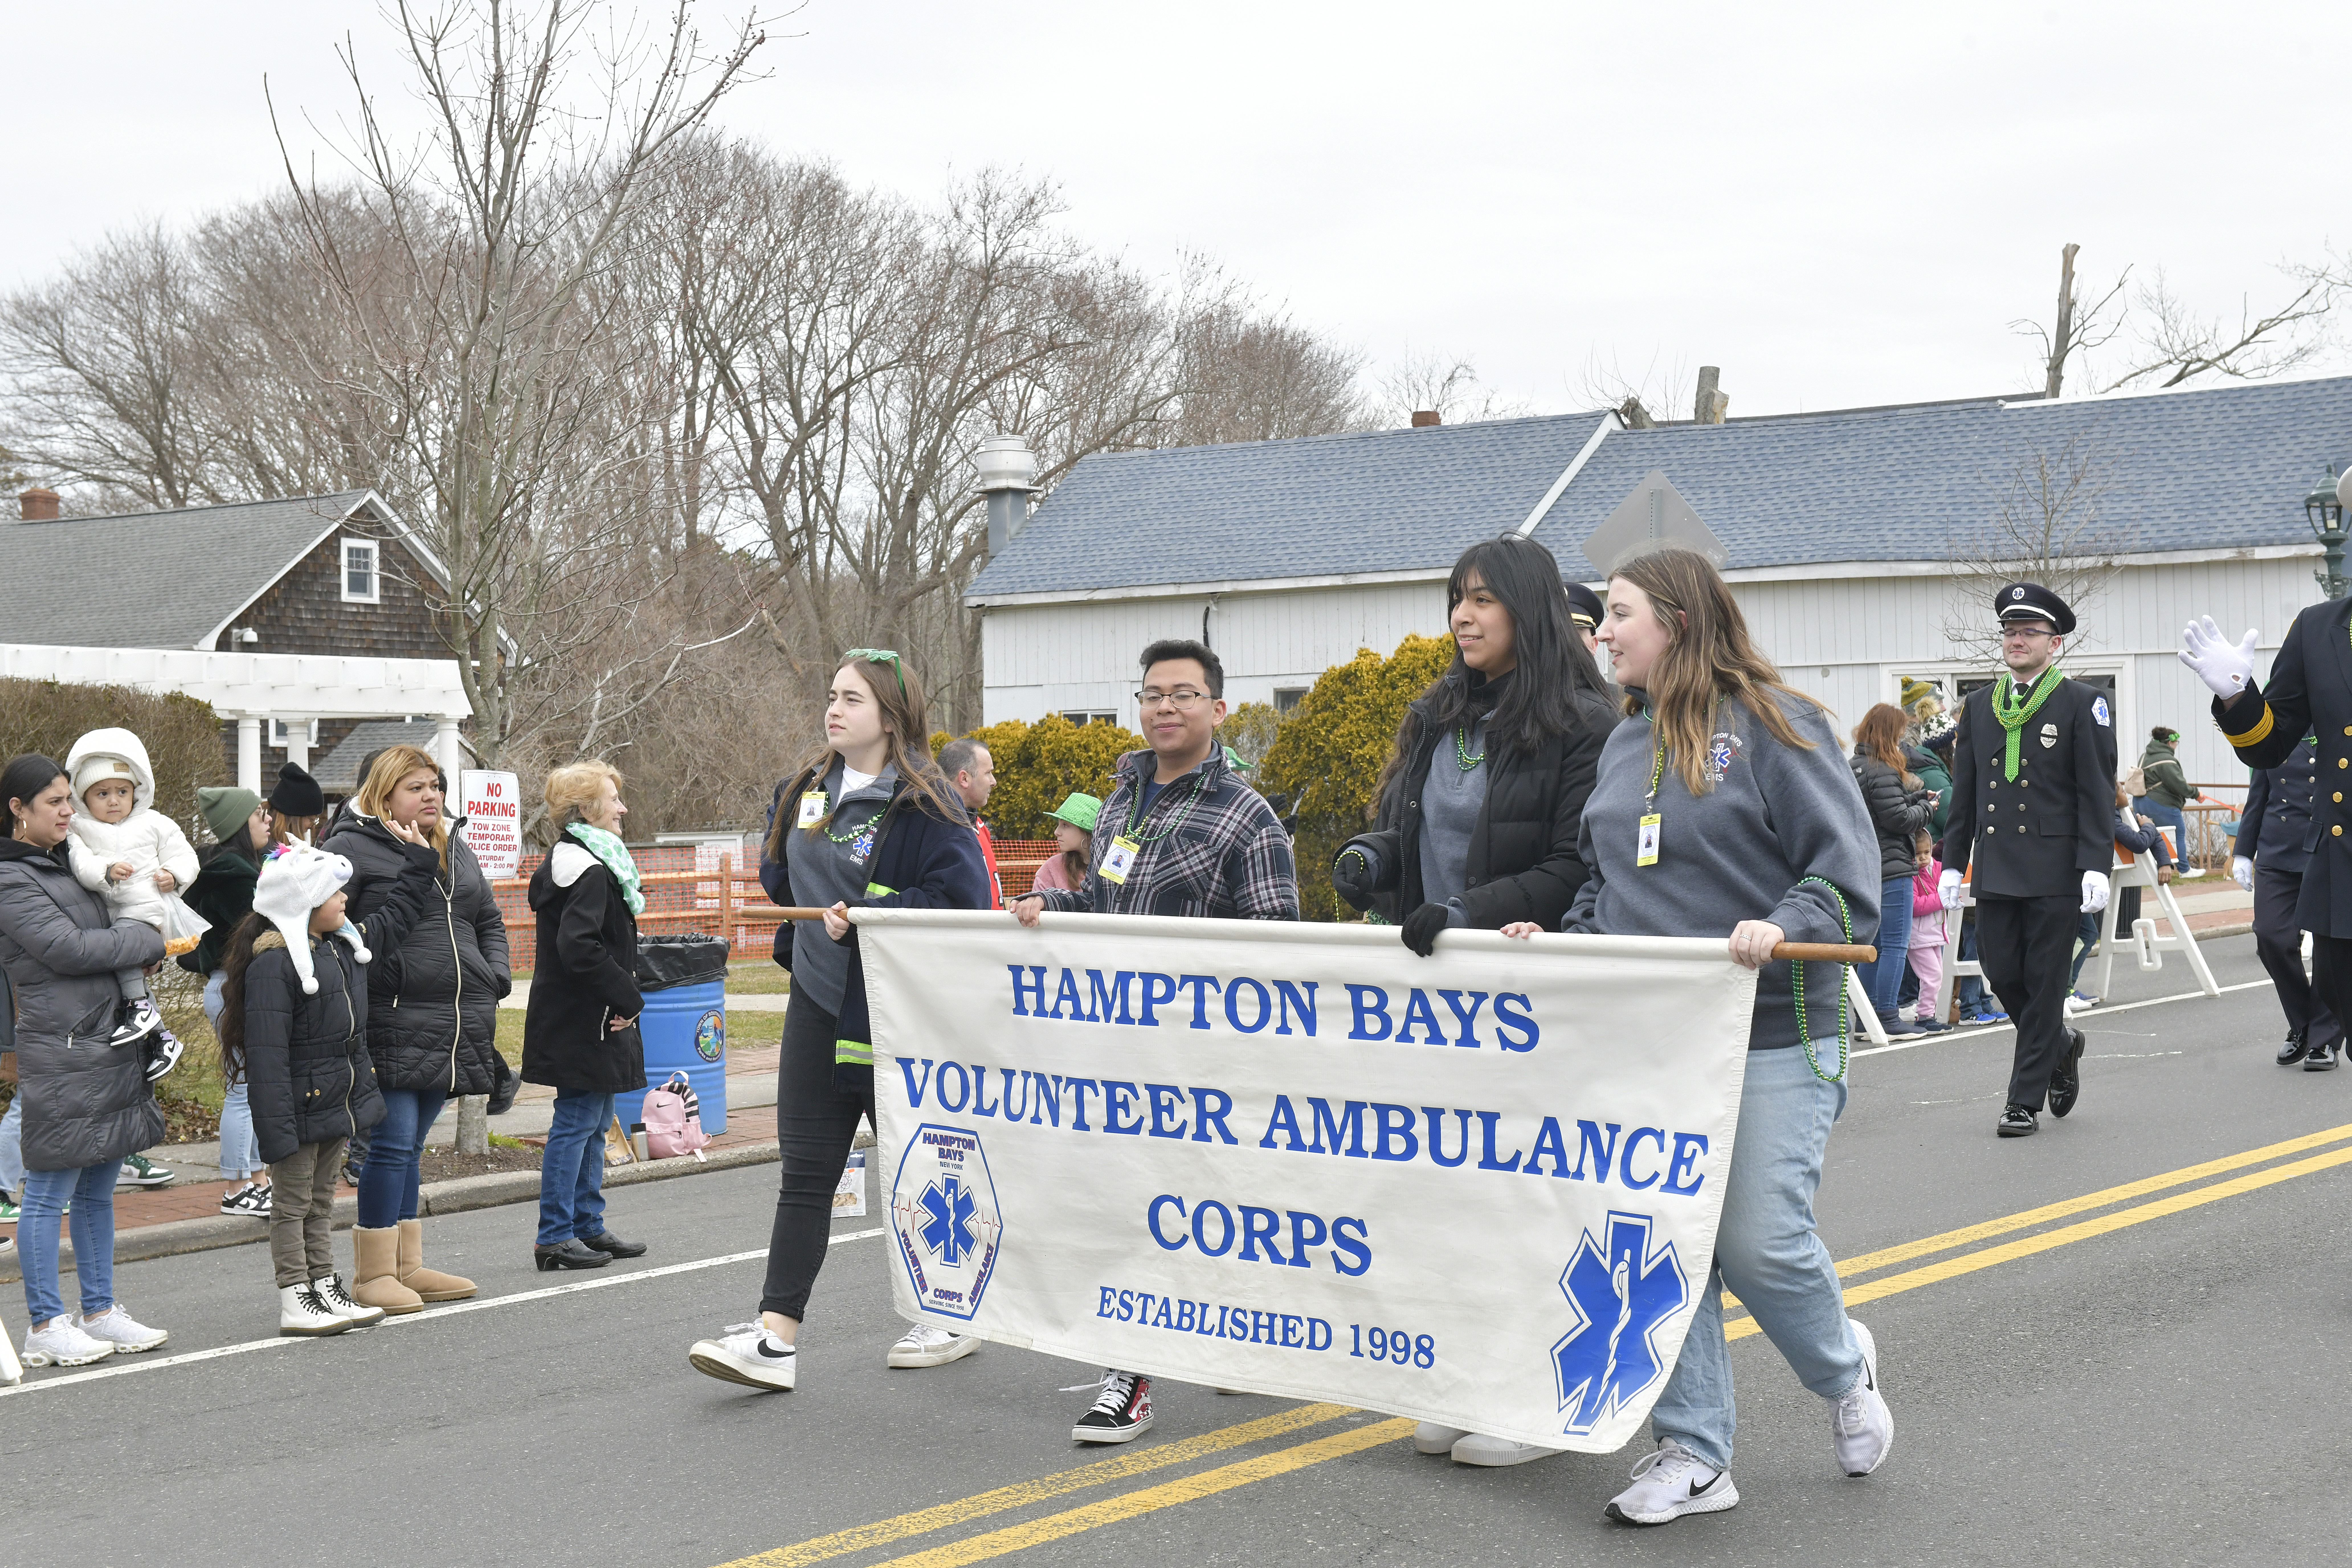 The Hampton Bays Volunteer Ambulance Corps.